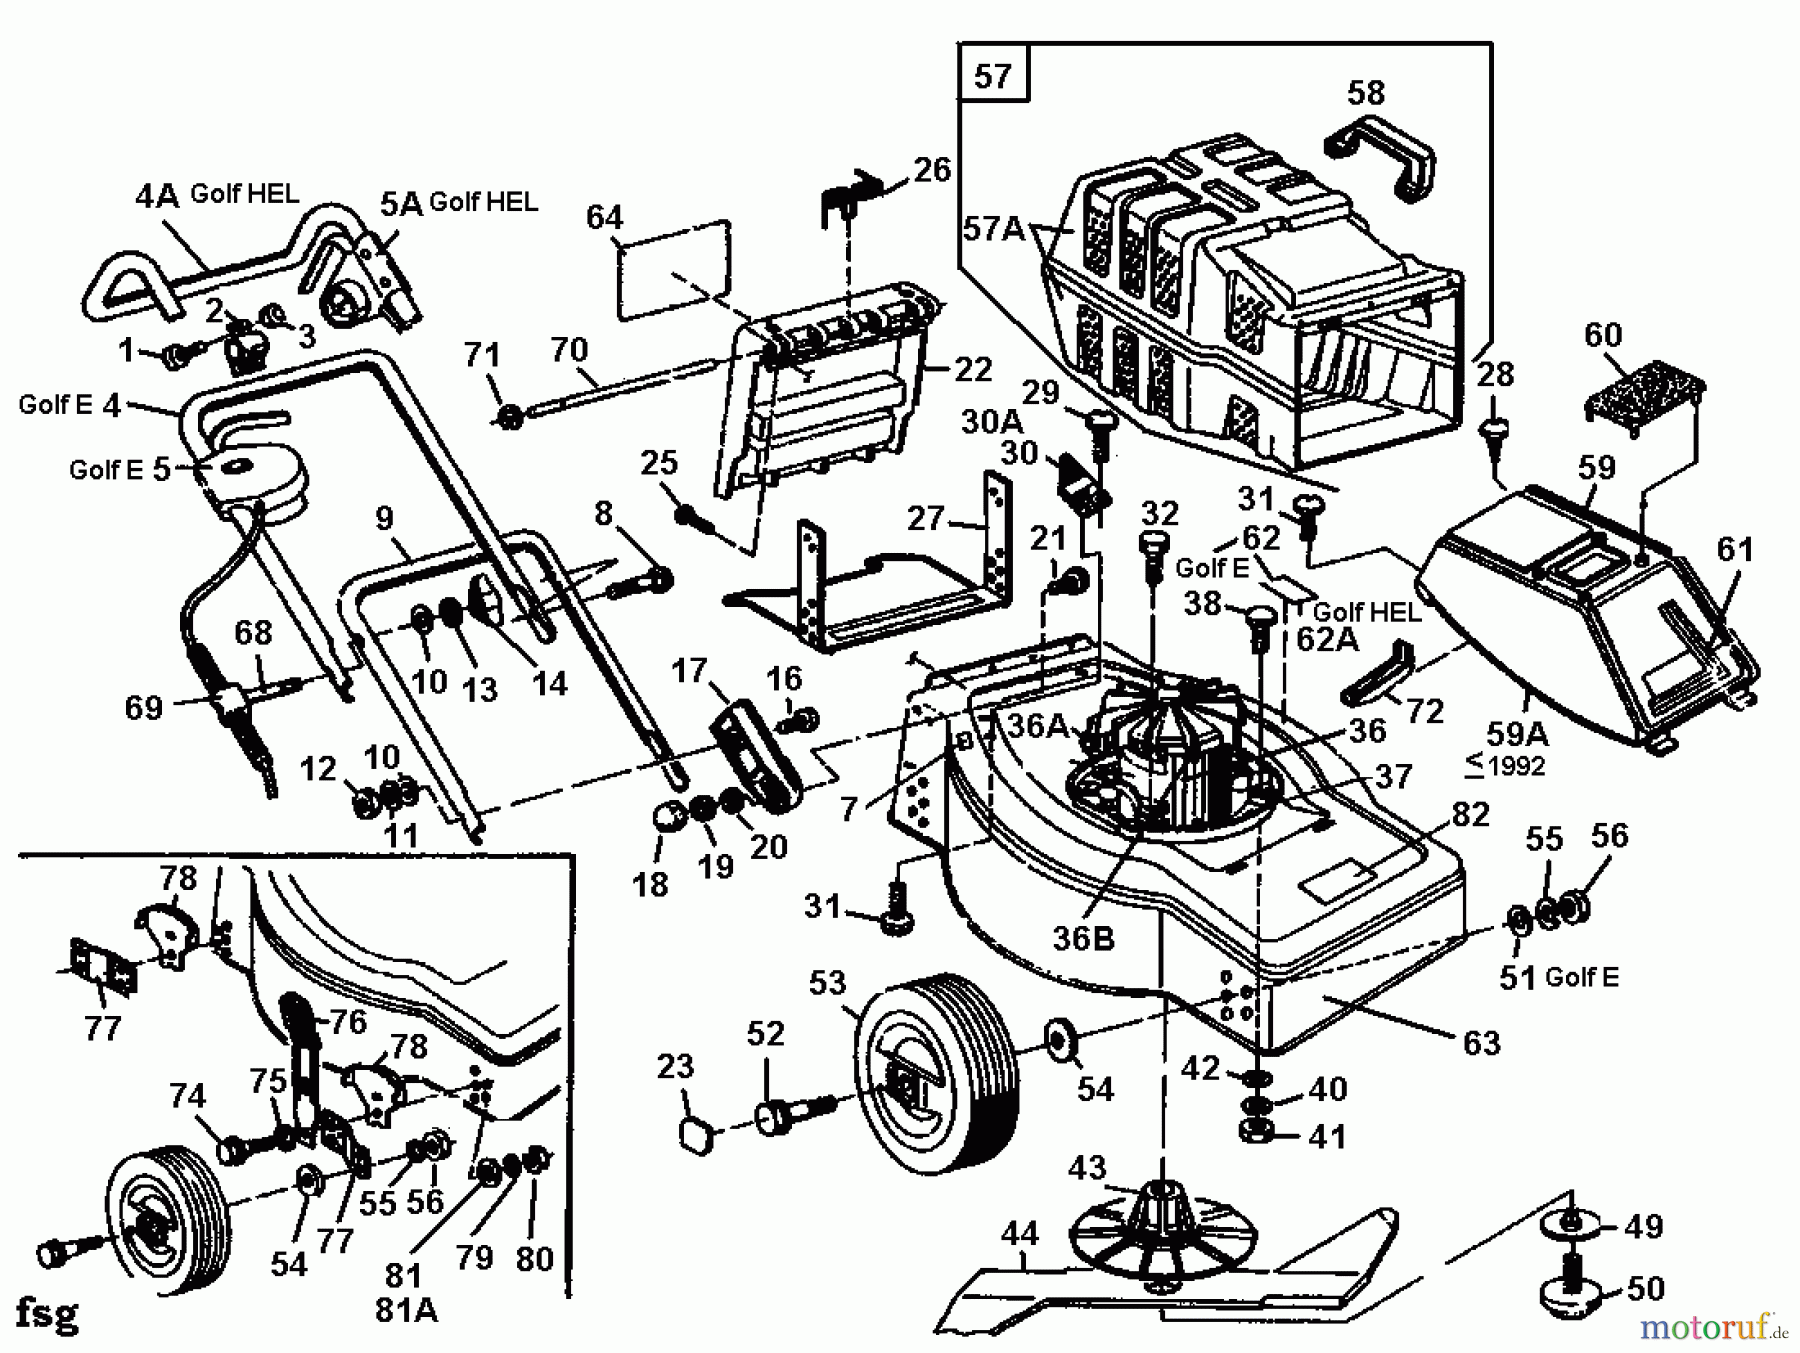  Golf Electric mower Golf E 02881.06  (1994) Basic machine